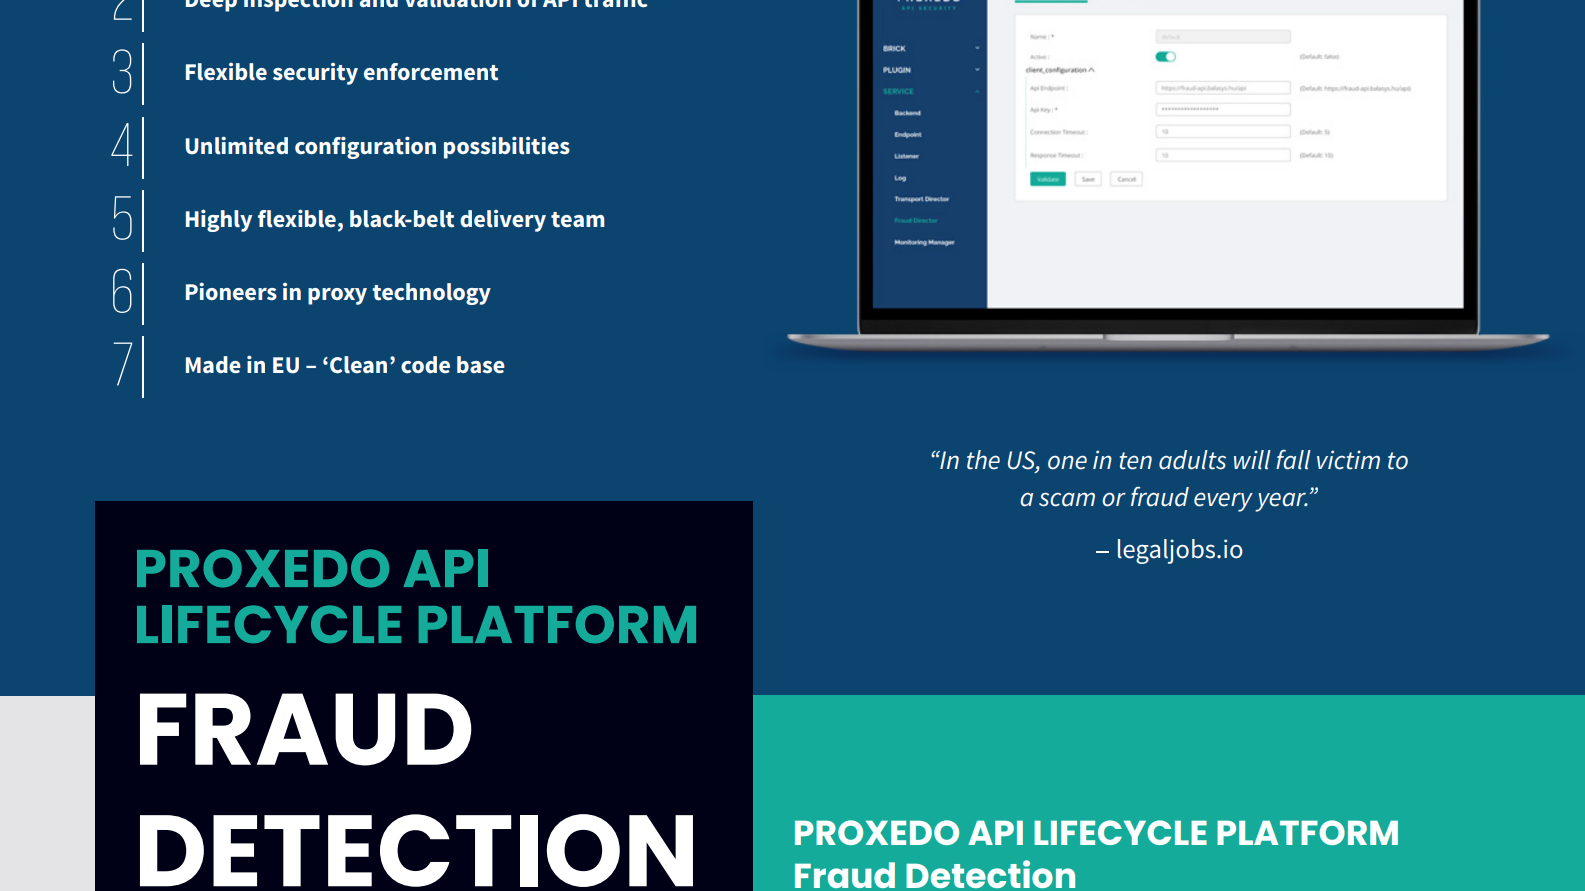 Proxedo API Lifecycle Platform - Fraud Detection flyer